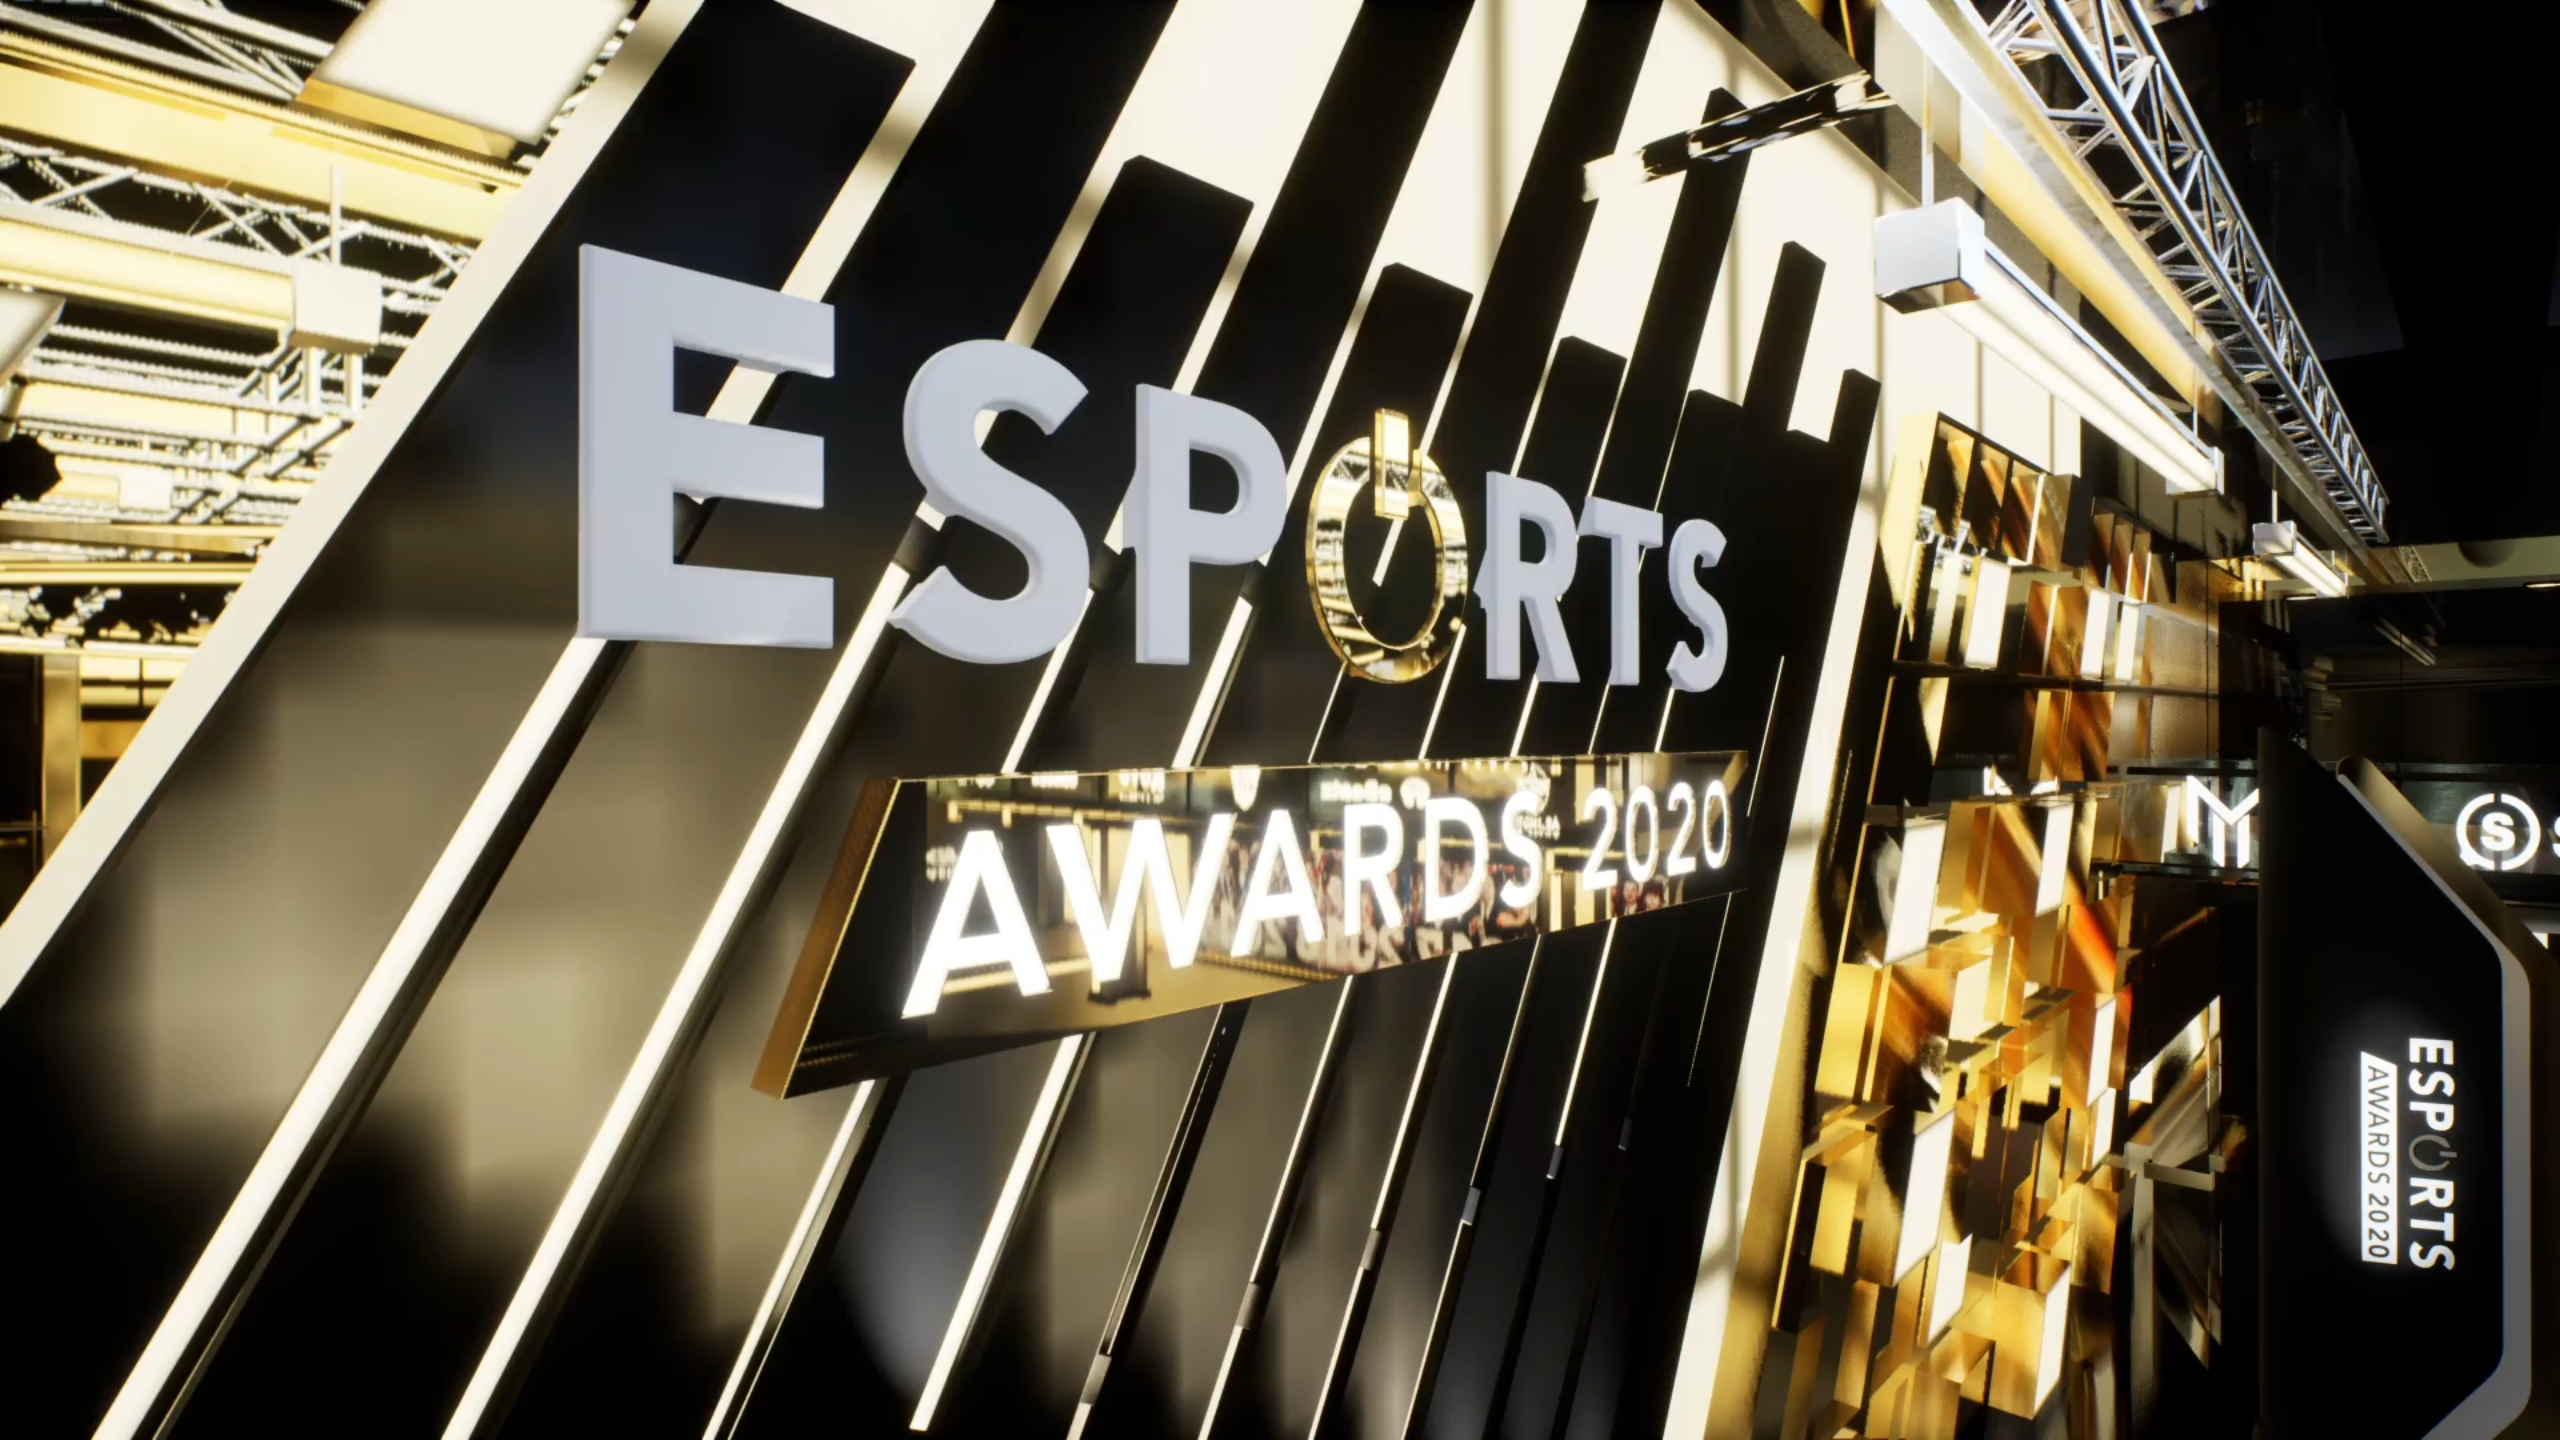 Esports Awards 2020 Held Virtually, G2 & Team Secret Amongst Biggest